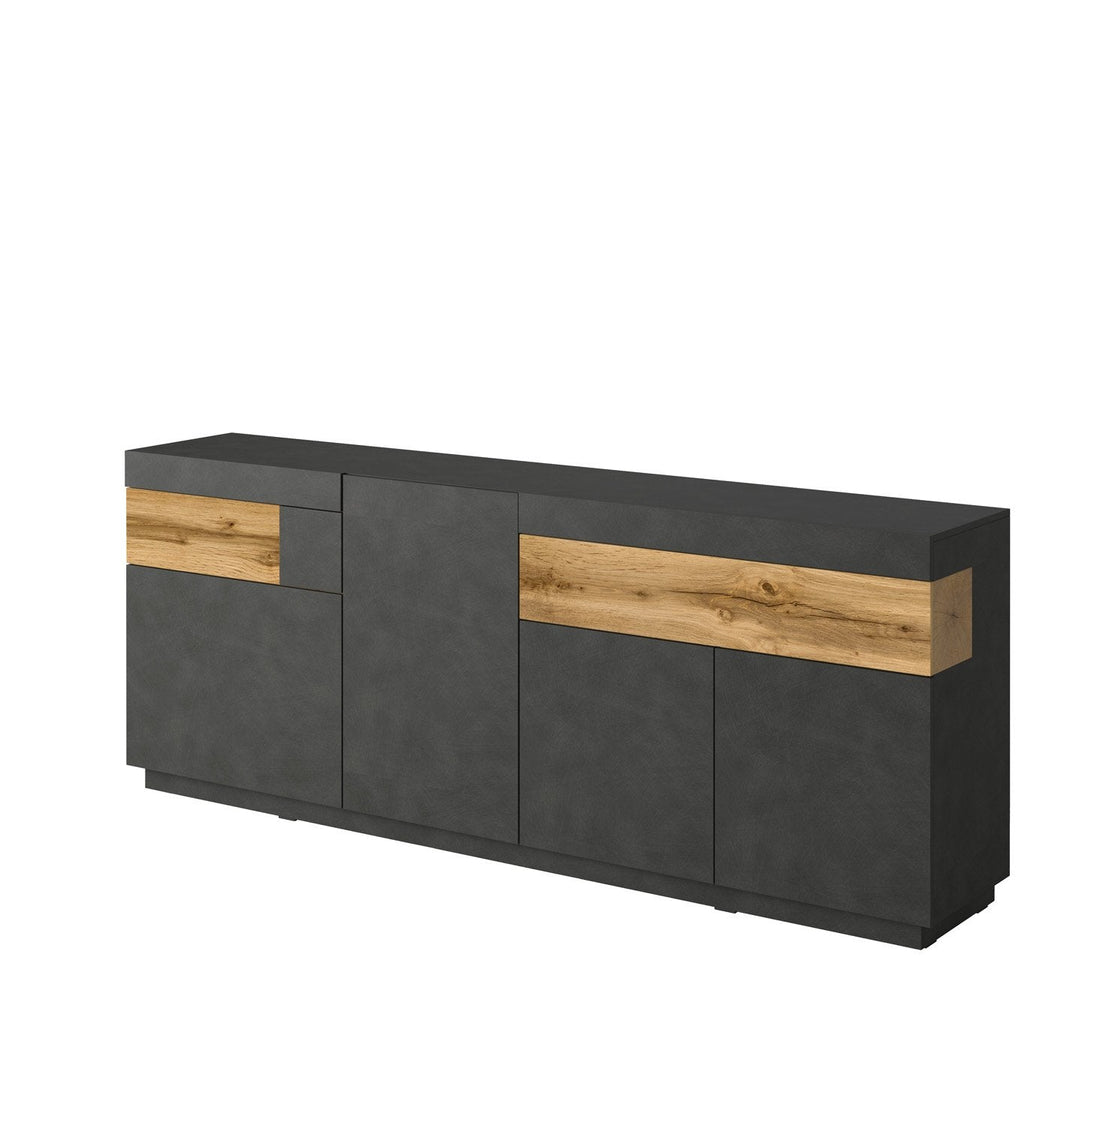 Silke 25 Sideboard Cabinet 219cm Living Sideboard Cabinet 